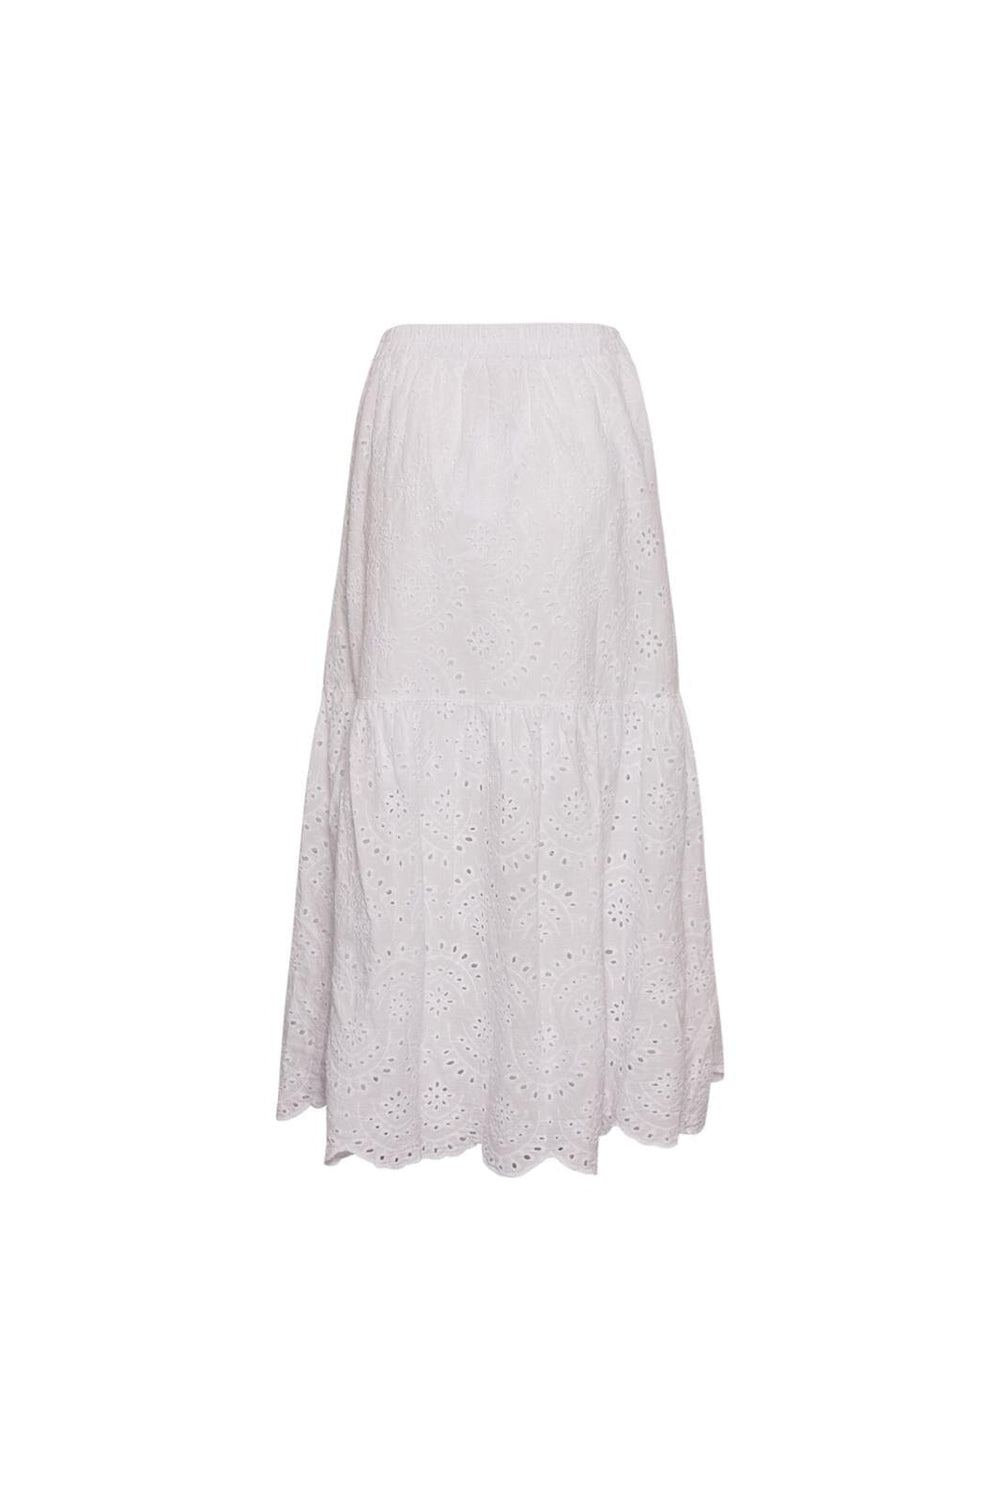 Noella - Sora Skirt - 028 White